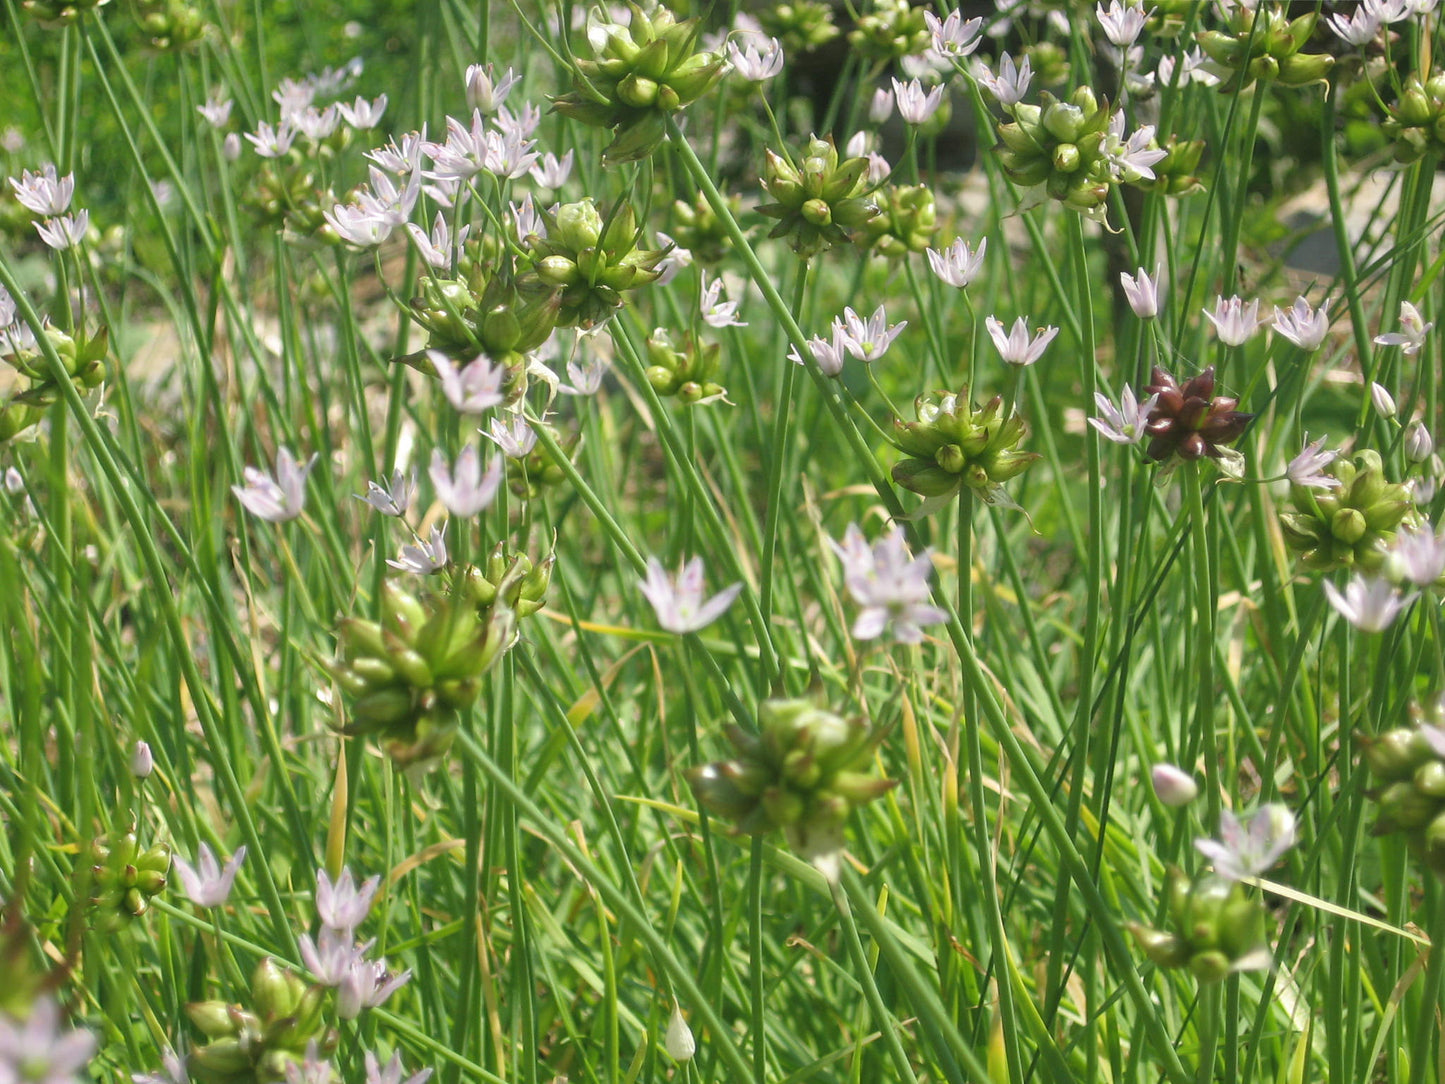 Meadow Garlic - Allium canadense ($1.25 per bulb)